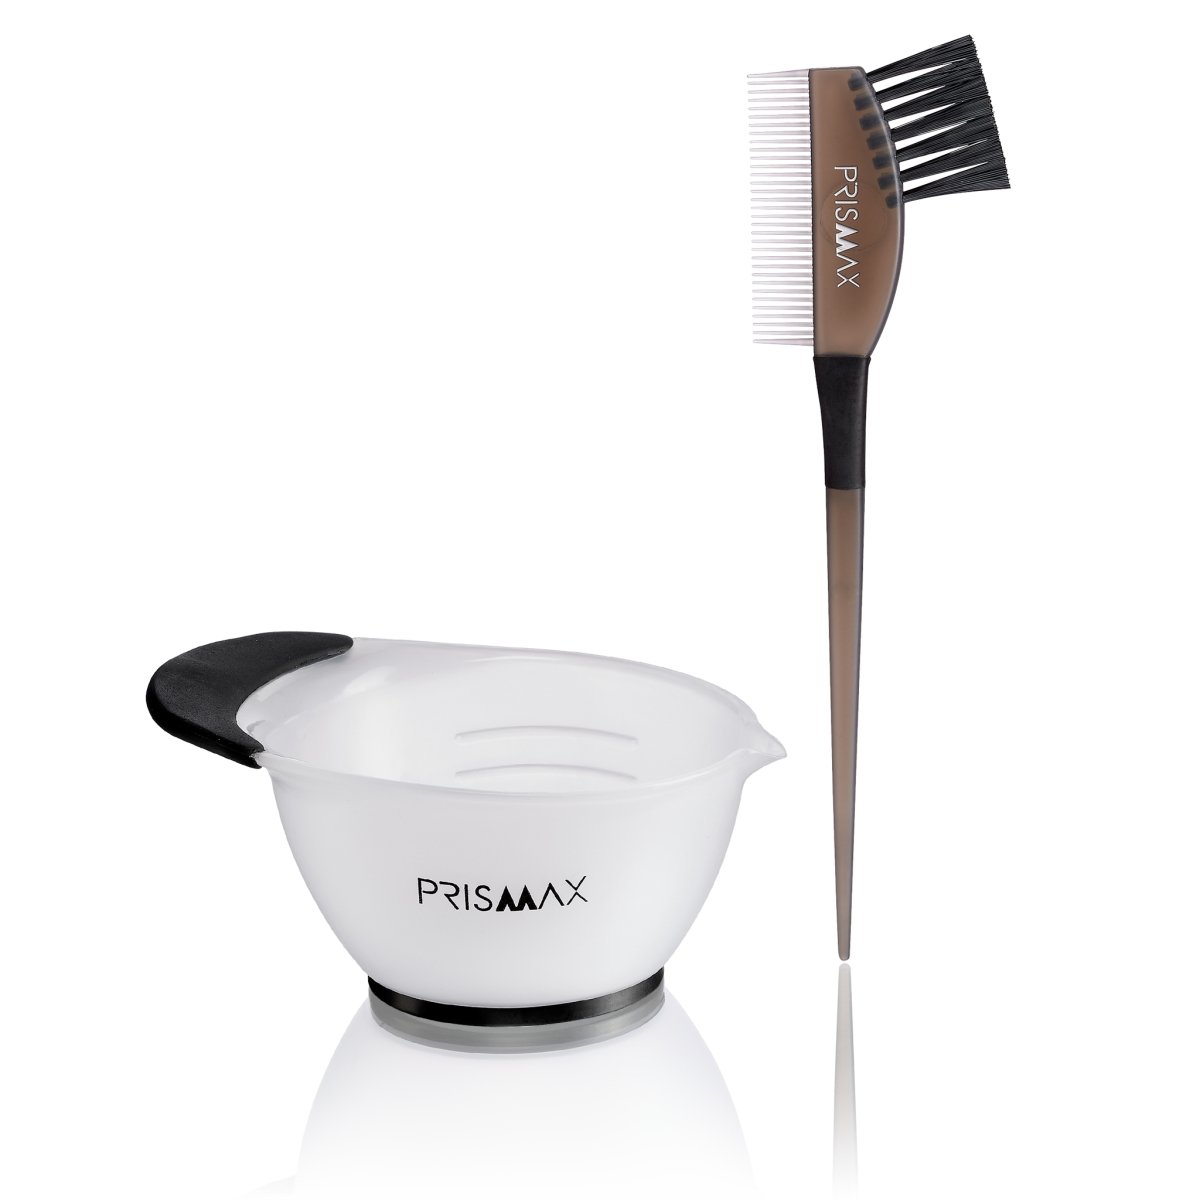 Prismax Mixing Bowl and Applicator Brush - Prismax Cosmetics